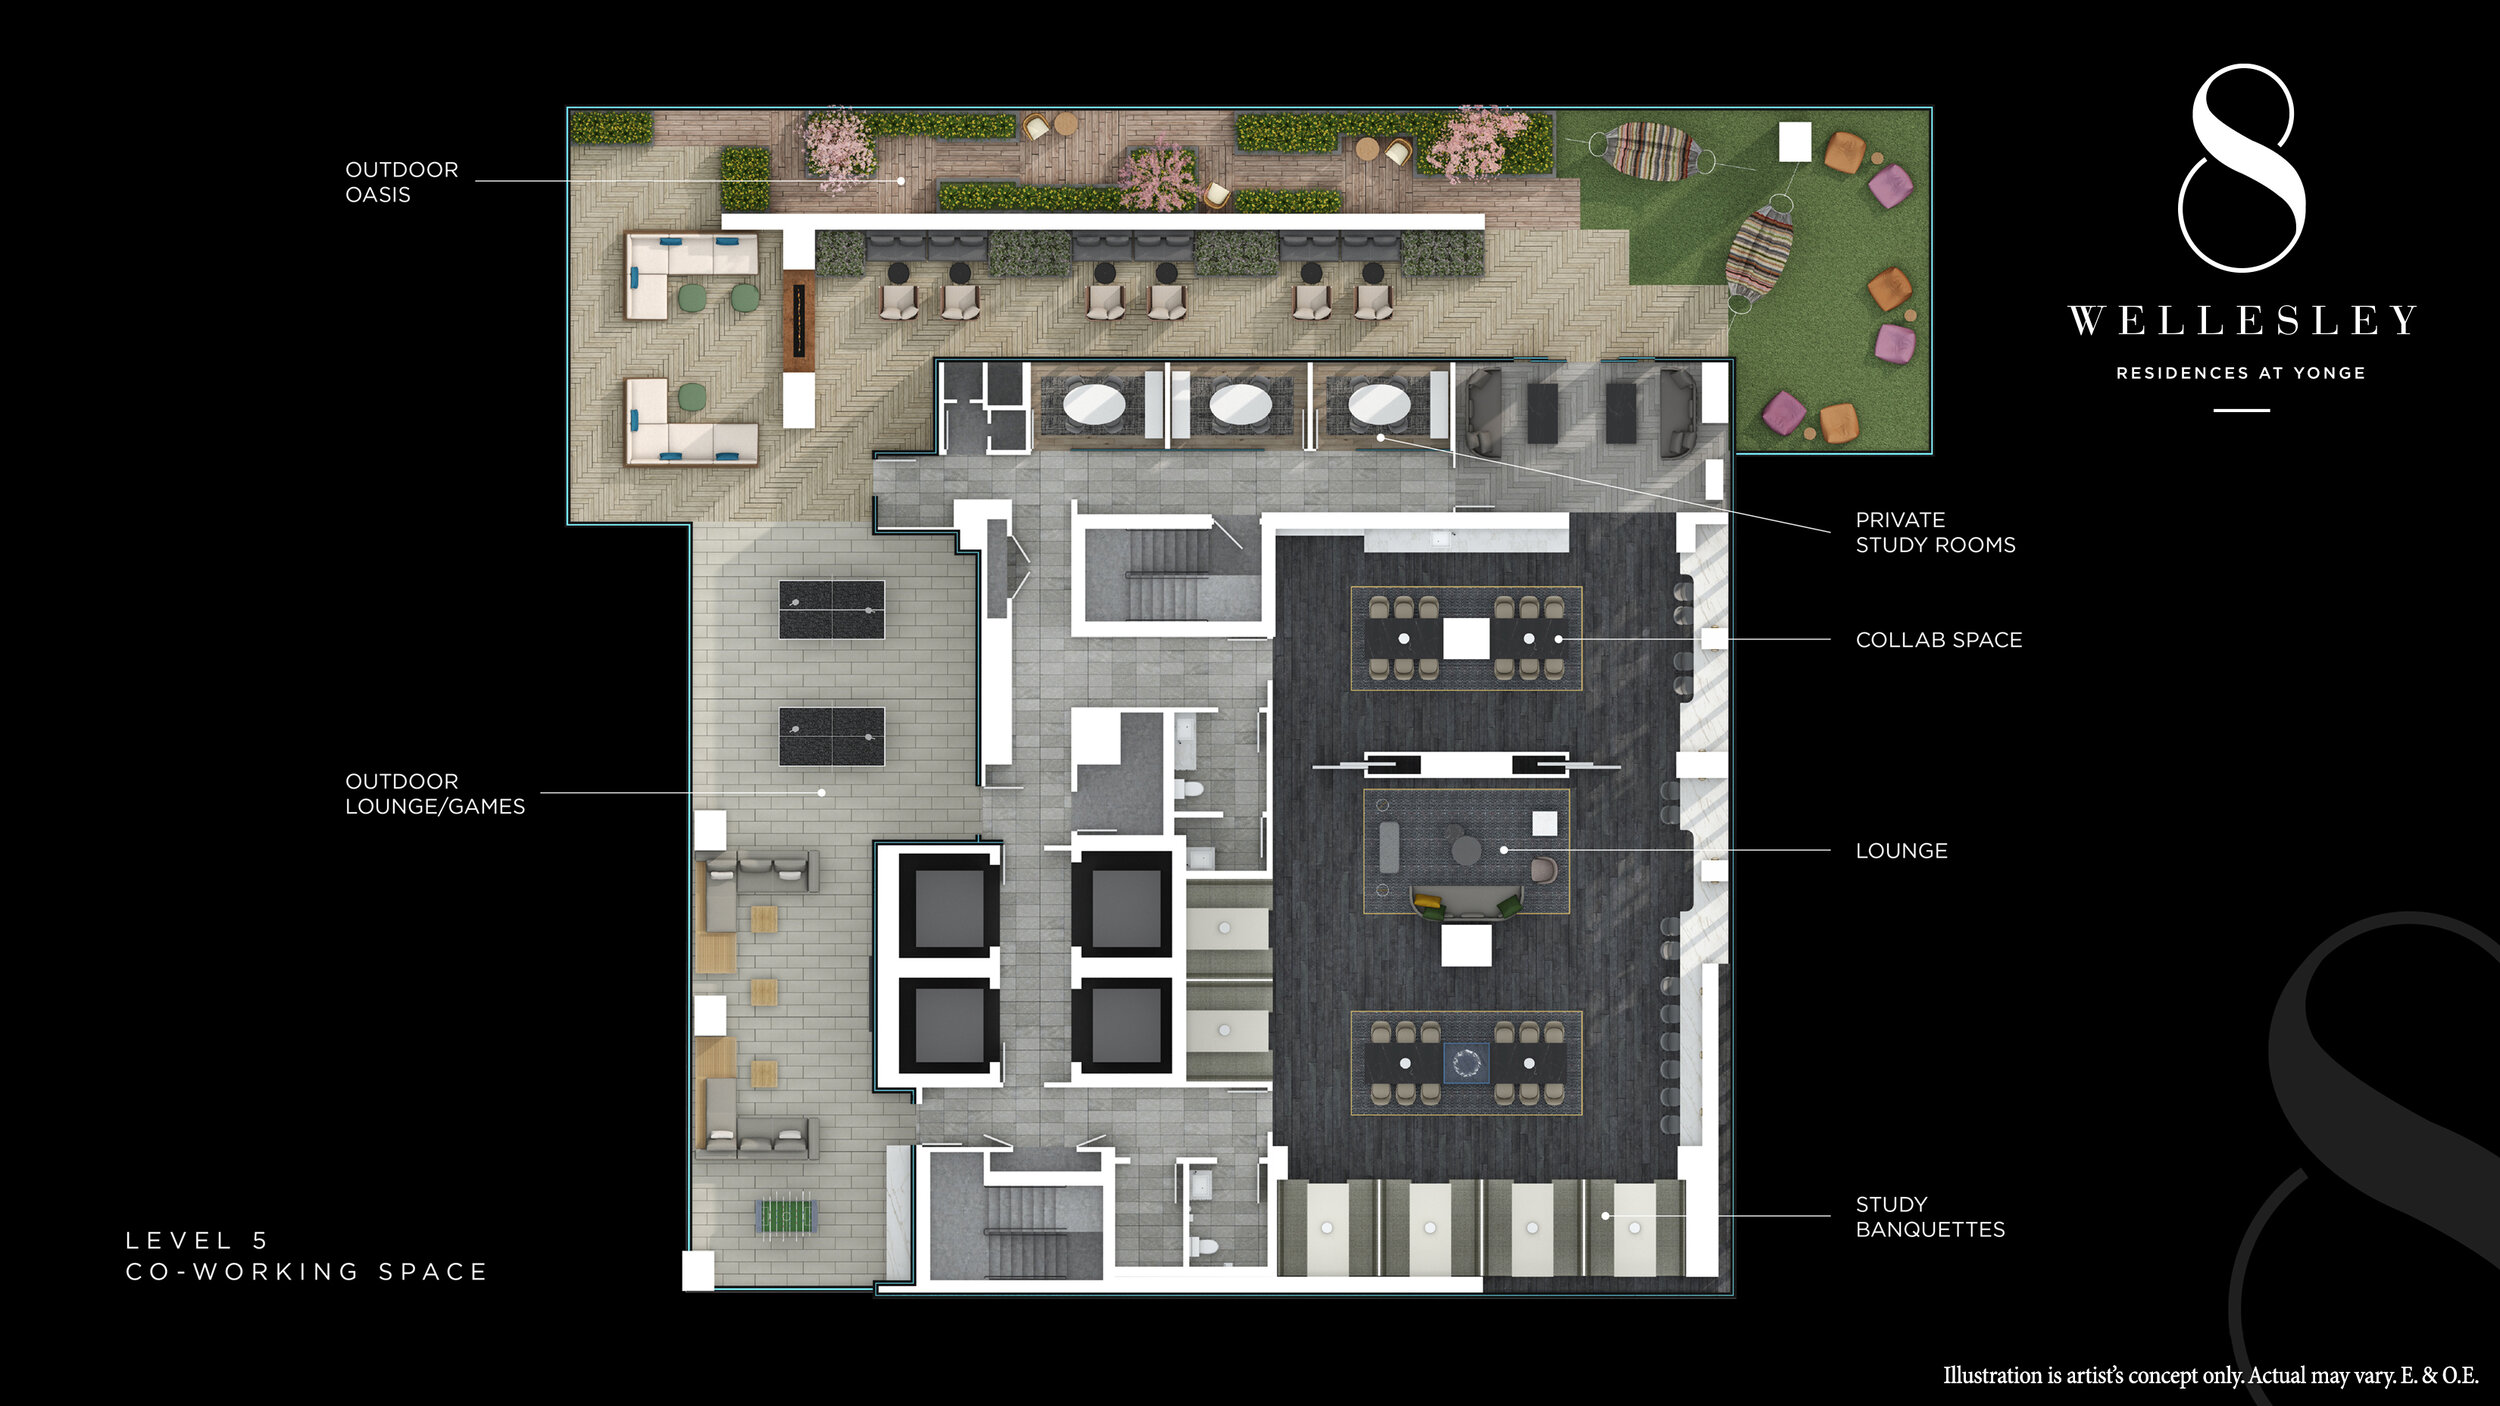 8 Wellesley - Level 5 Flat (Co-Working Space).jpg